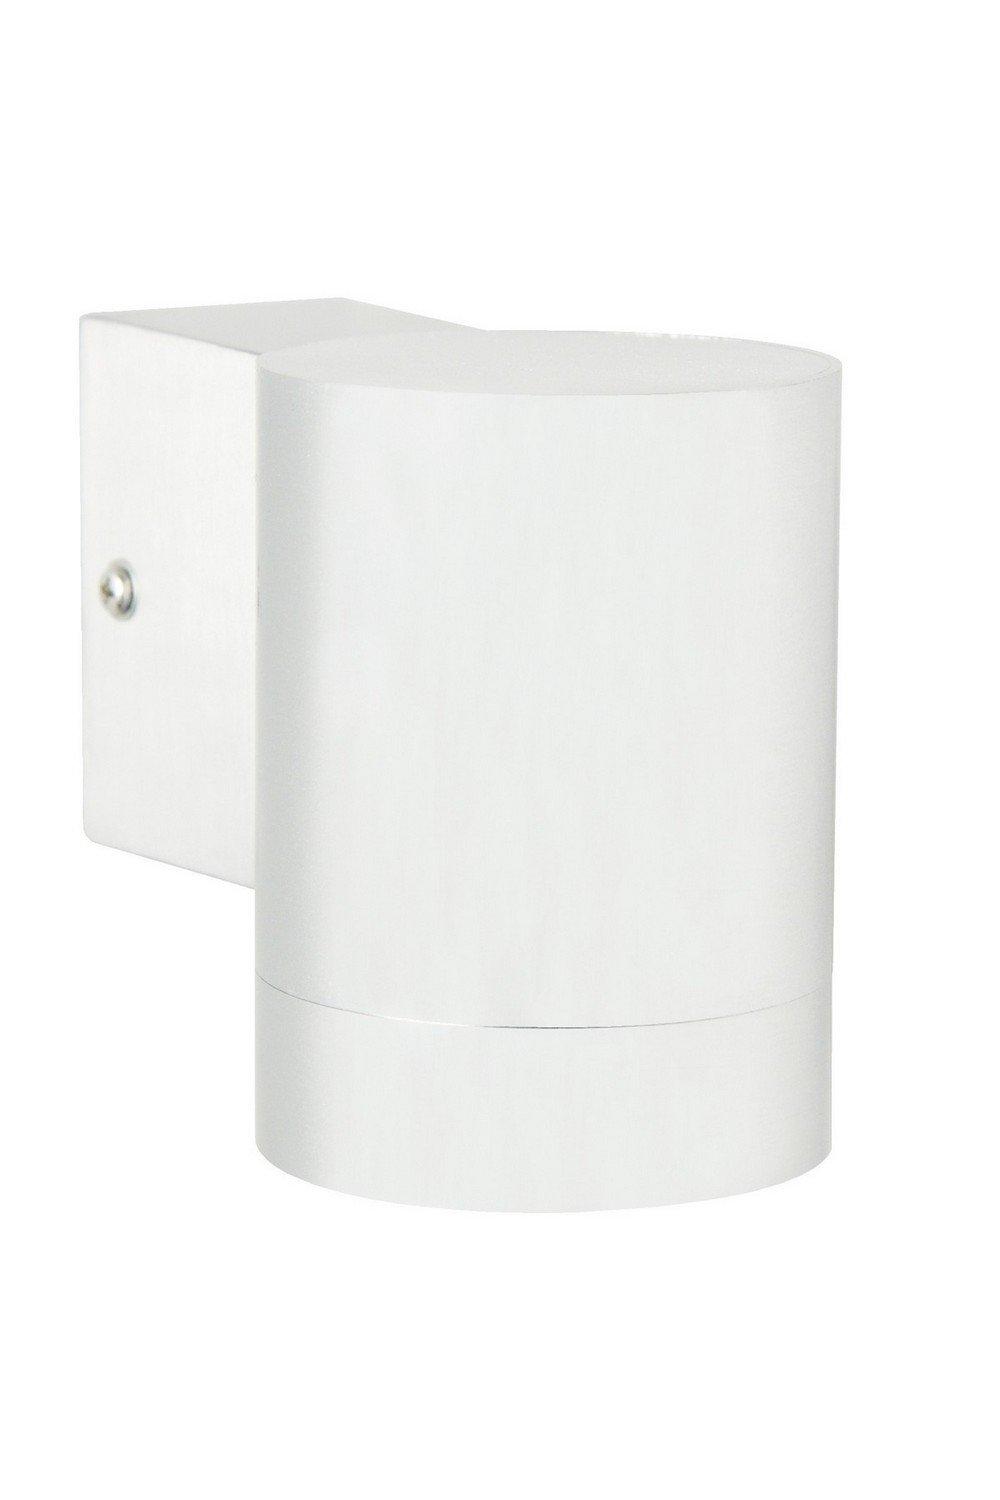 Tin Maxi Outdoor Down Wall Lamp White GU10 IP54